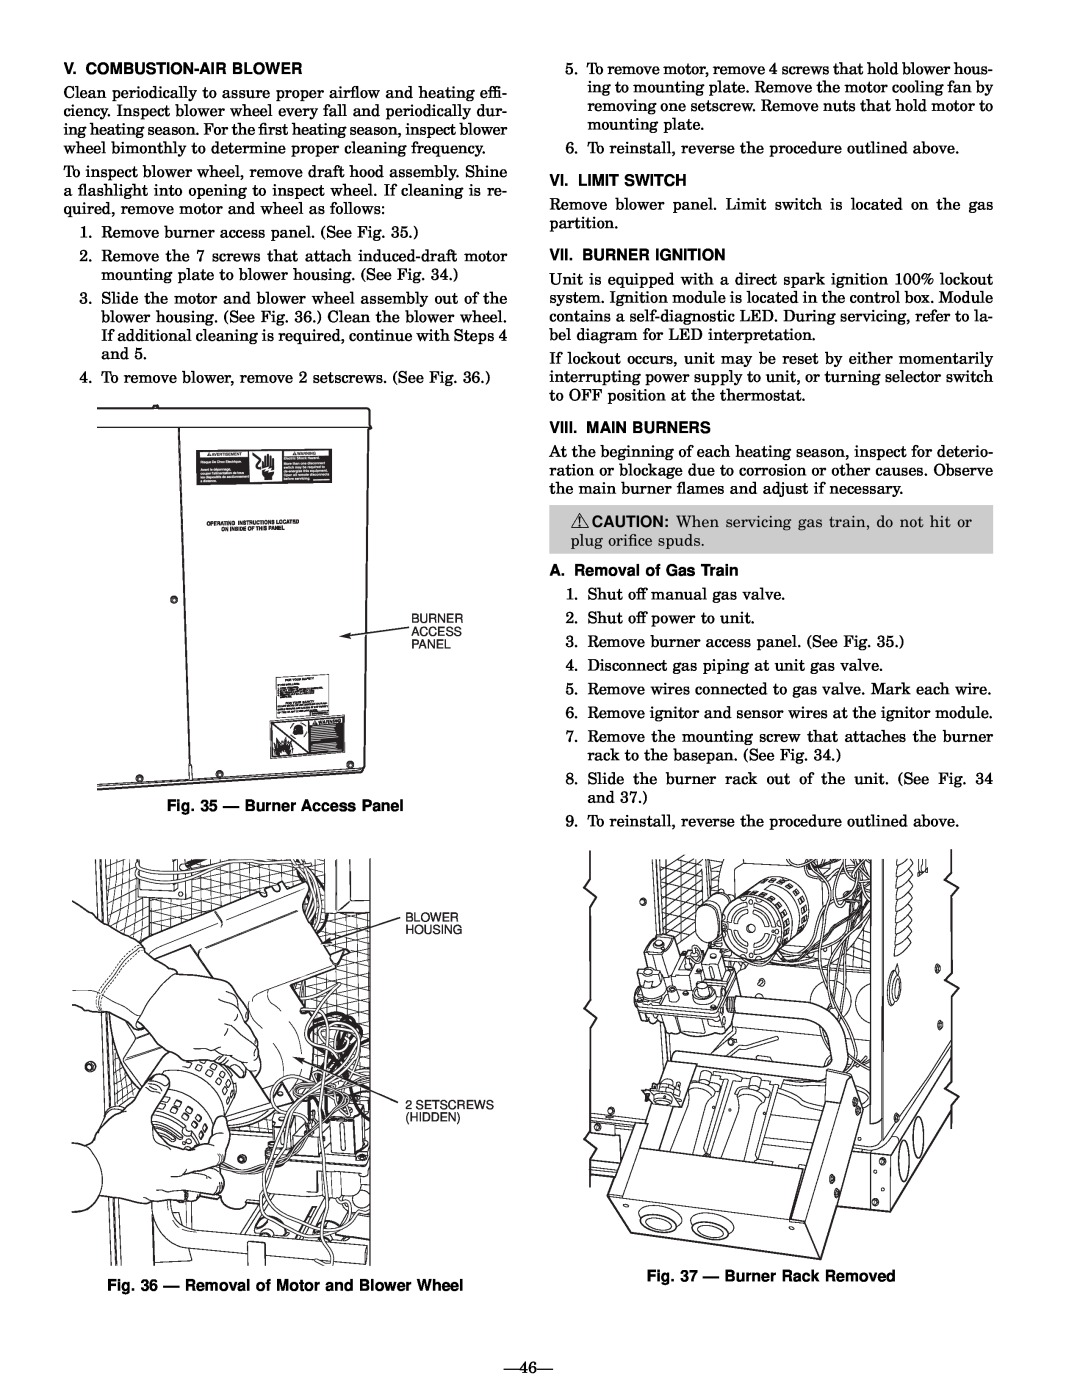 Bryant 588A V. Combustion-Airblower, Ð Burner Access Panel, Vi. Limit Switch, Vii. Burner Ignition, Viii. Main Burners 